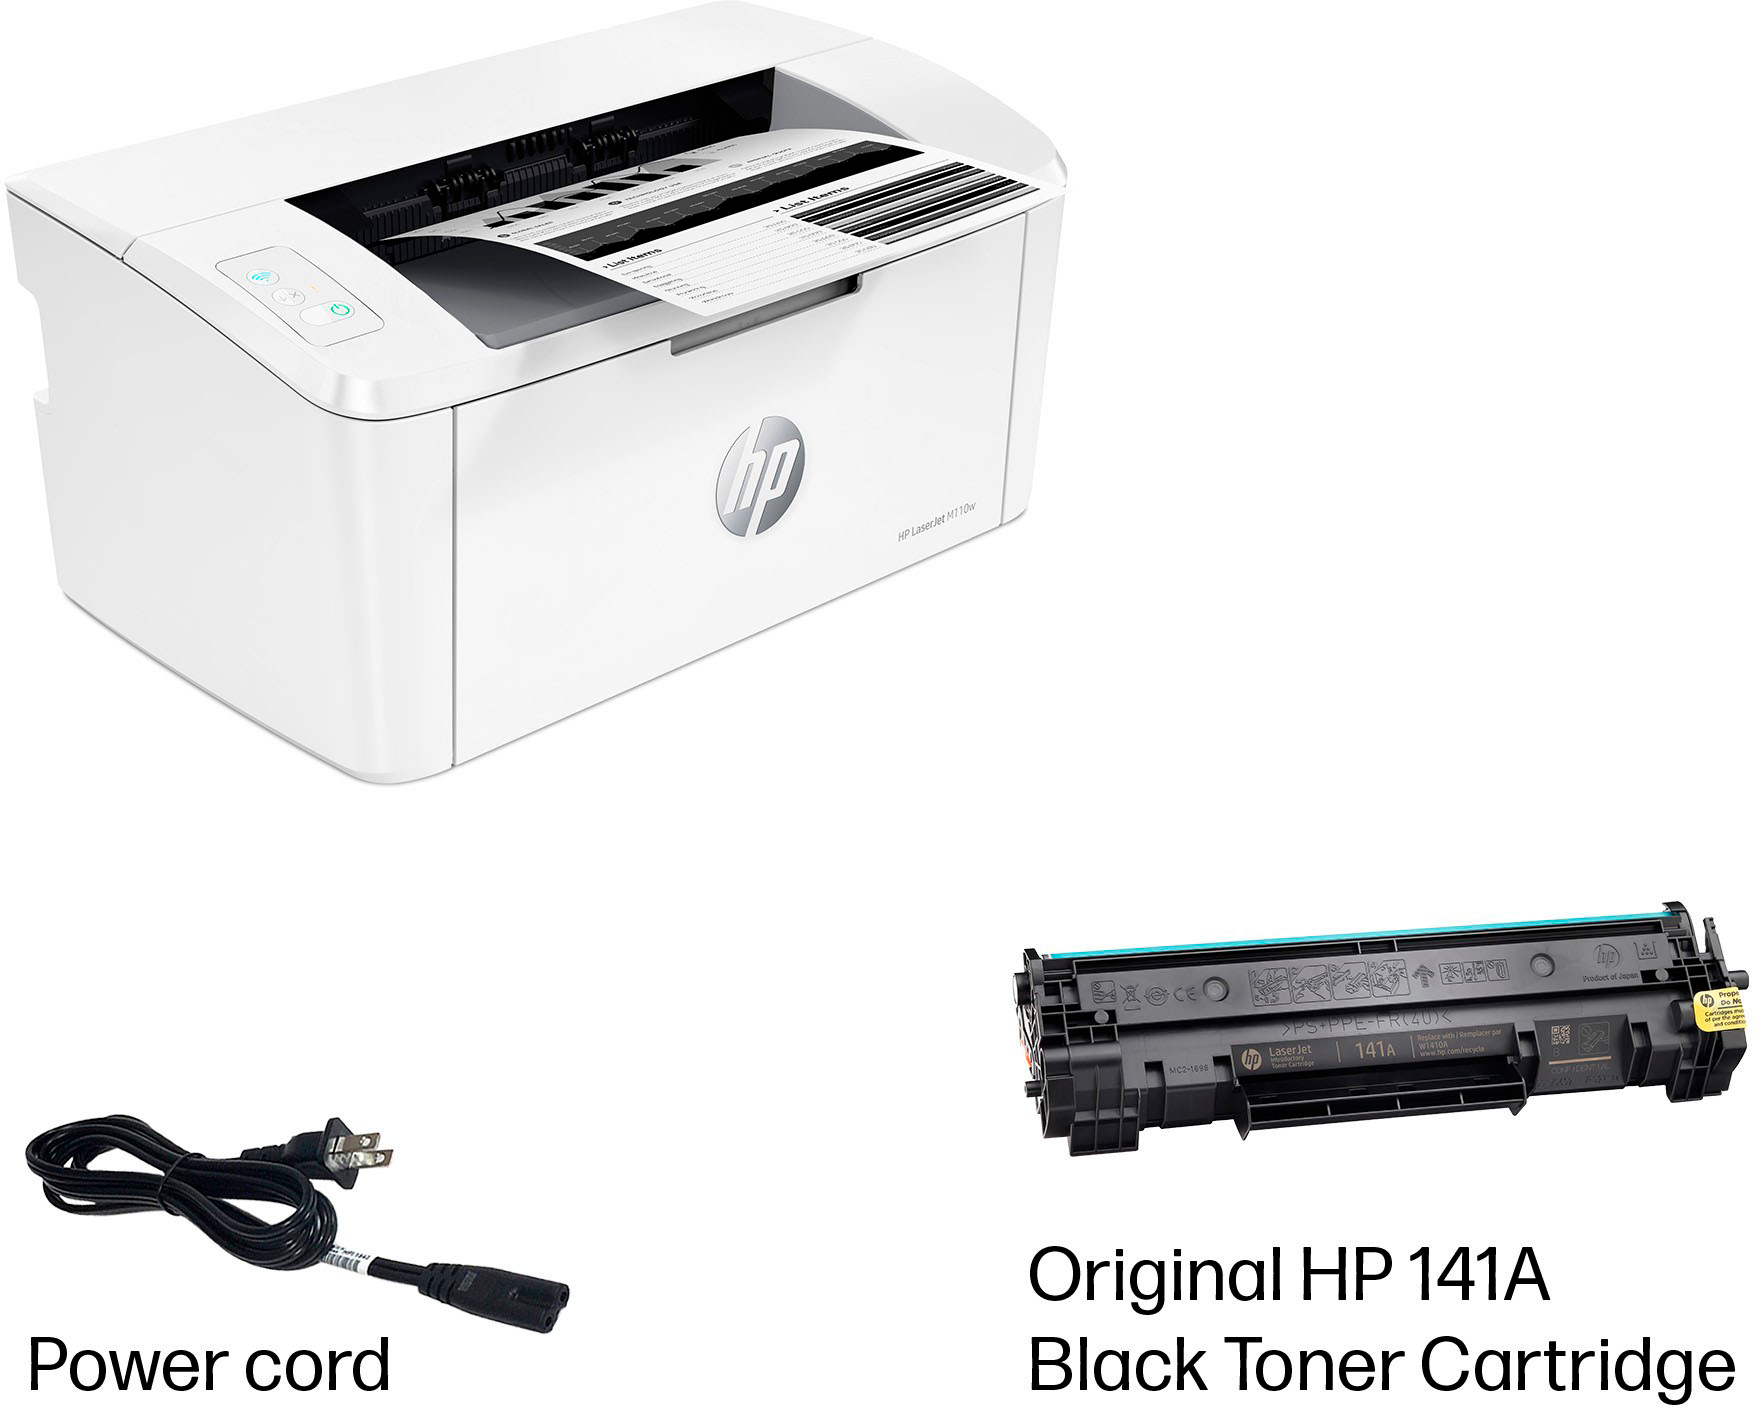 HP LaserJet M110w Wireless Best White Buy White LaserJet - and Black Laser M110w Printer